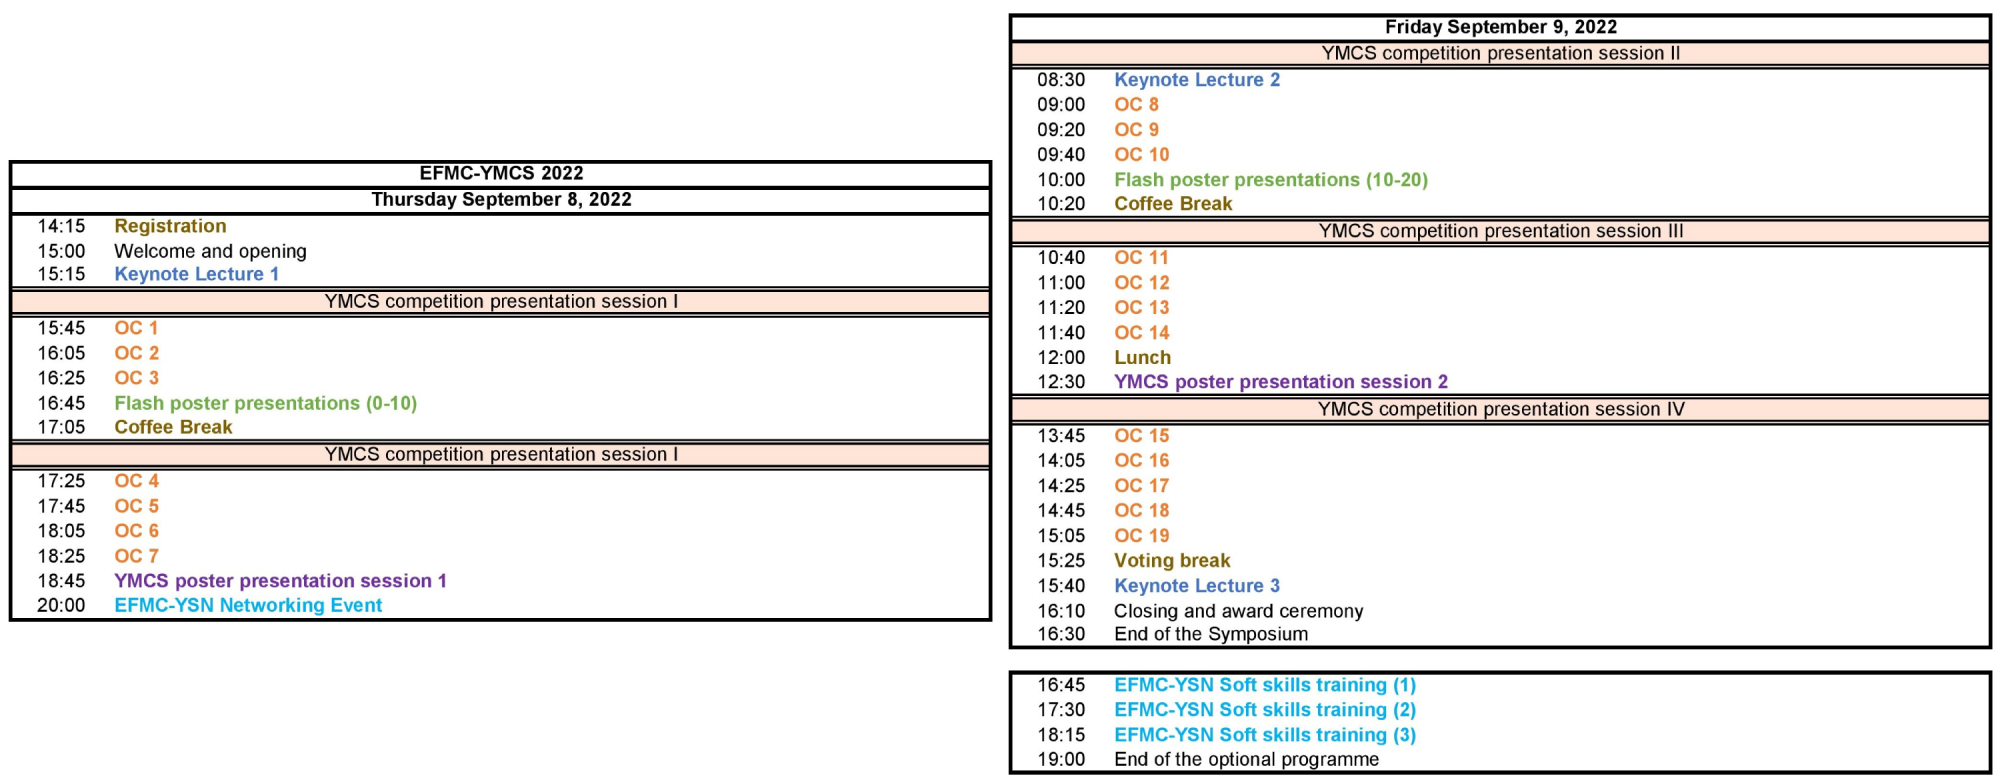 Preliminary Programme Schedule